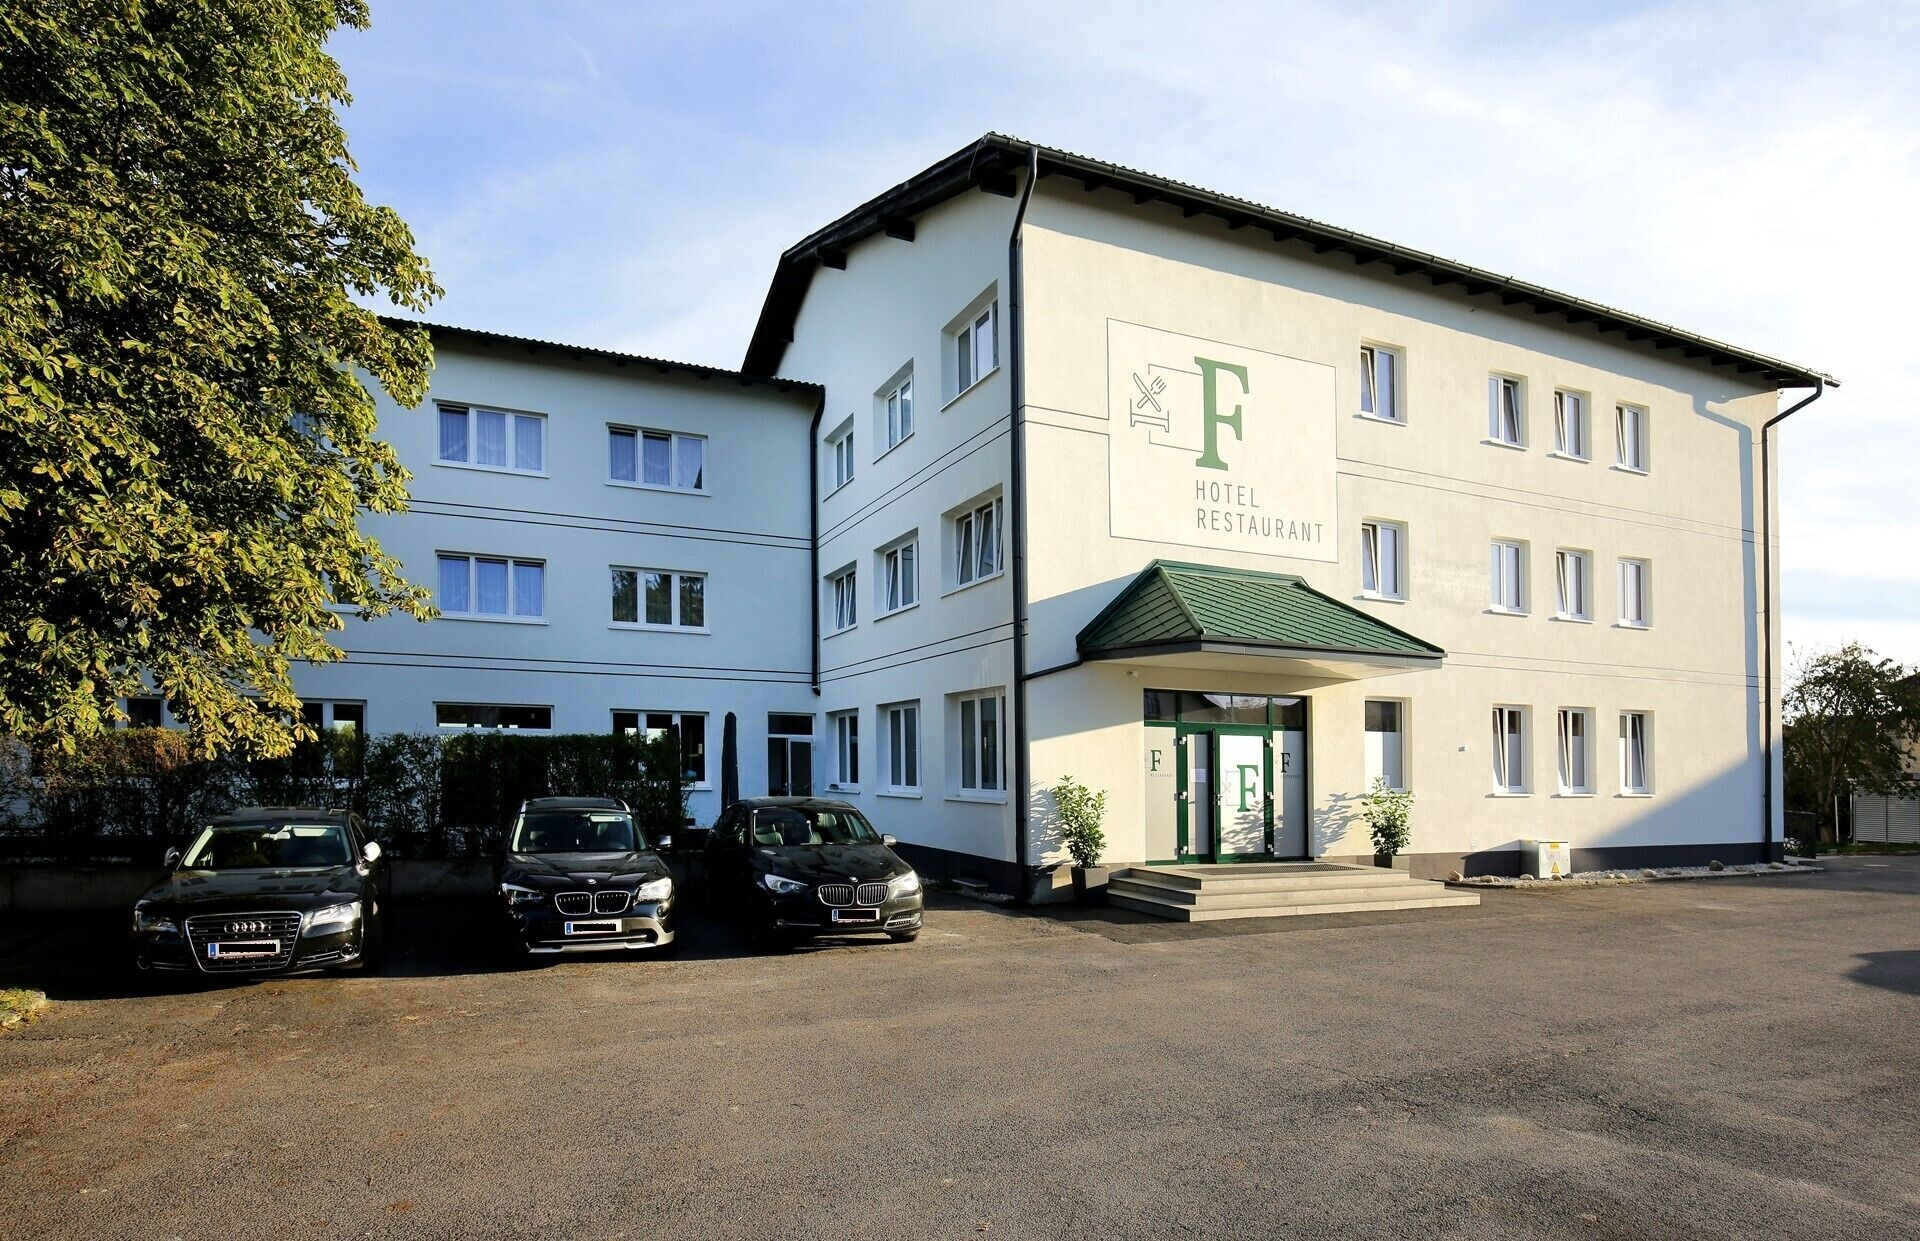 F Hotel, Linz Land